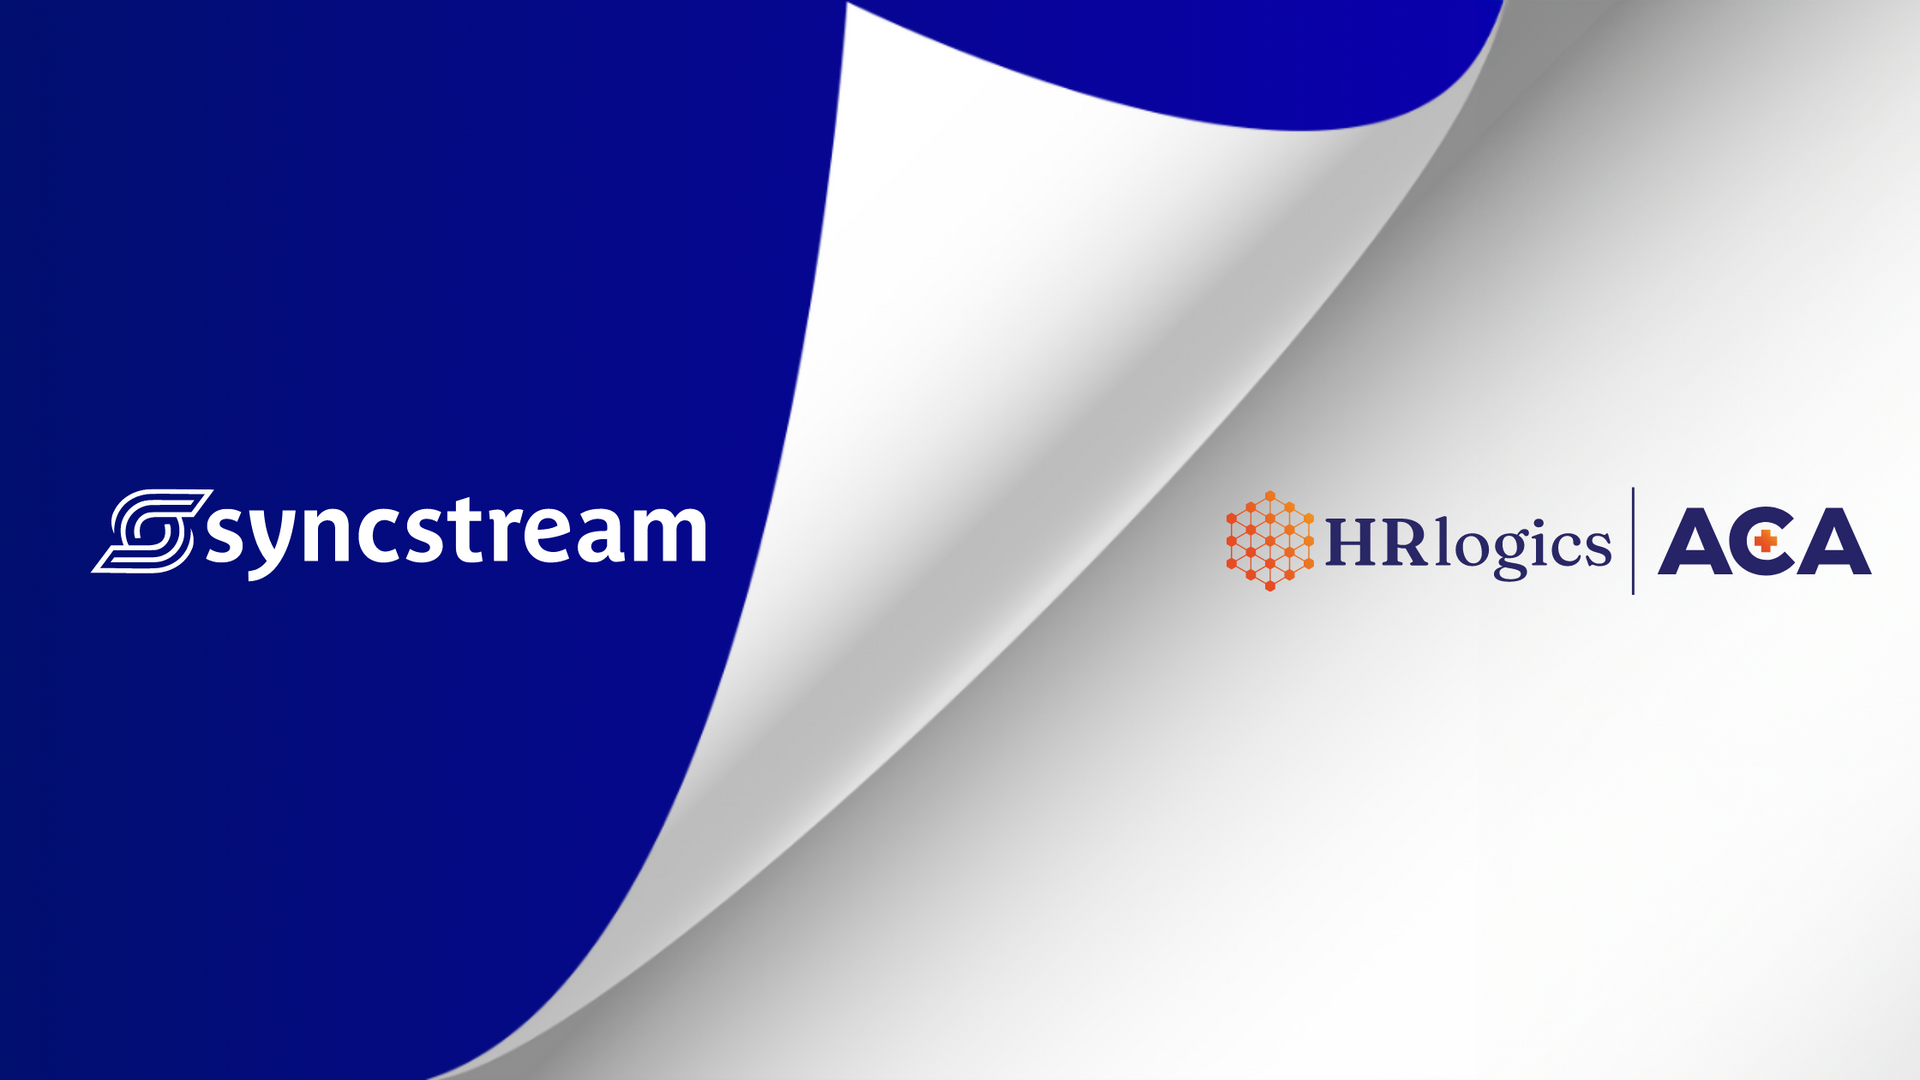 SyncStream Solutions Rebrands as HRlogics ACA